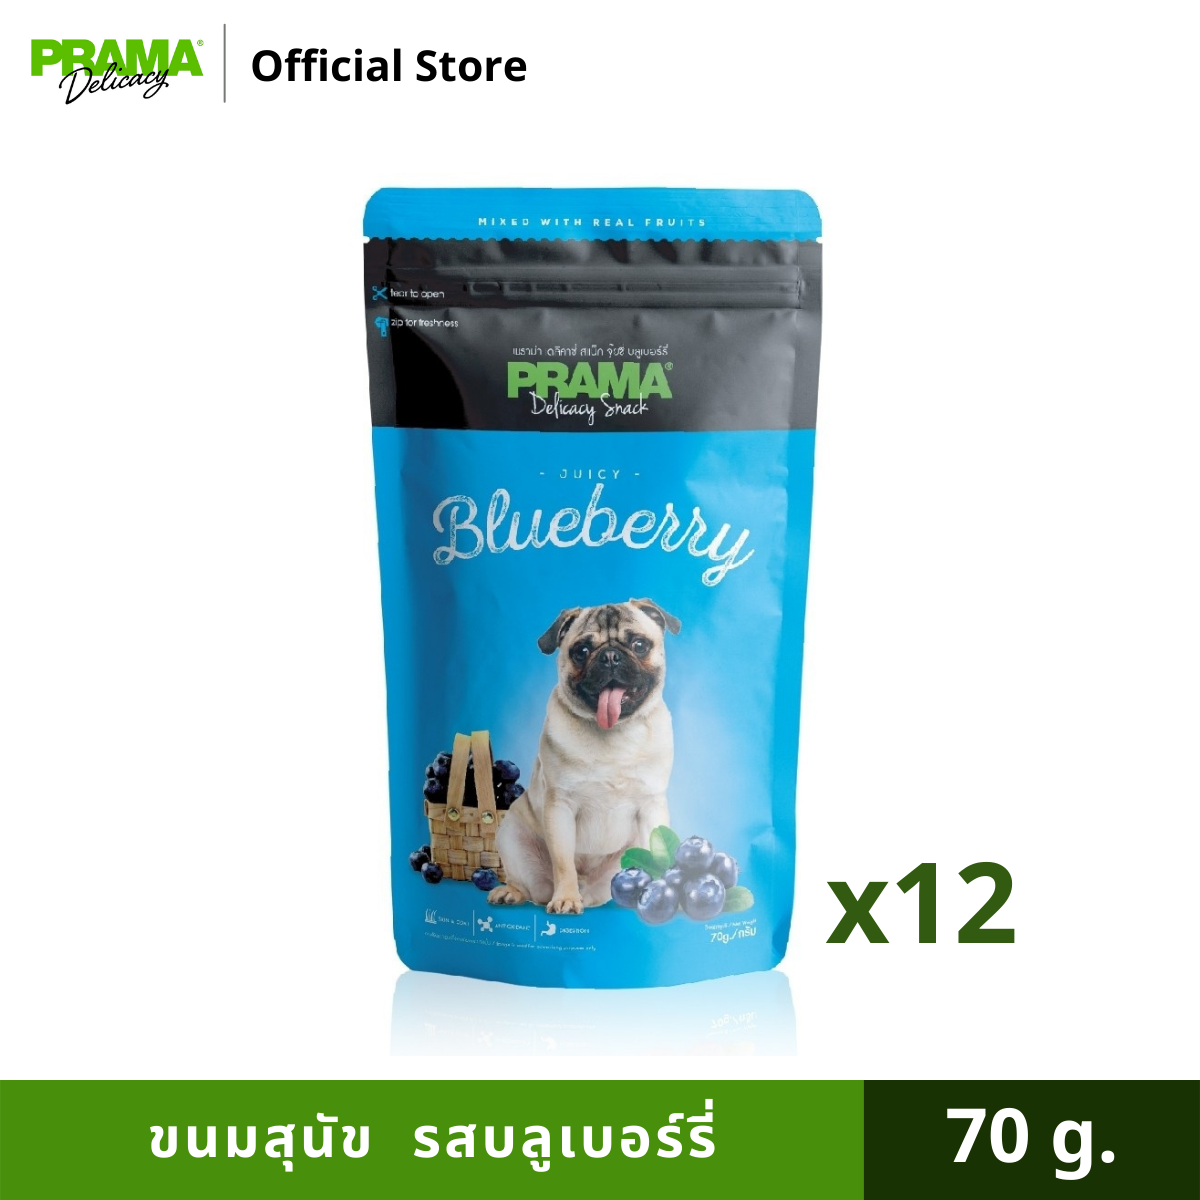 PRAMA Delicacy พราม่า เดลิคาซี่ รสบลูเบอร์รี่ ขนมสุนัข ขนาด 70 กรัม - 12 ซอง / Box